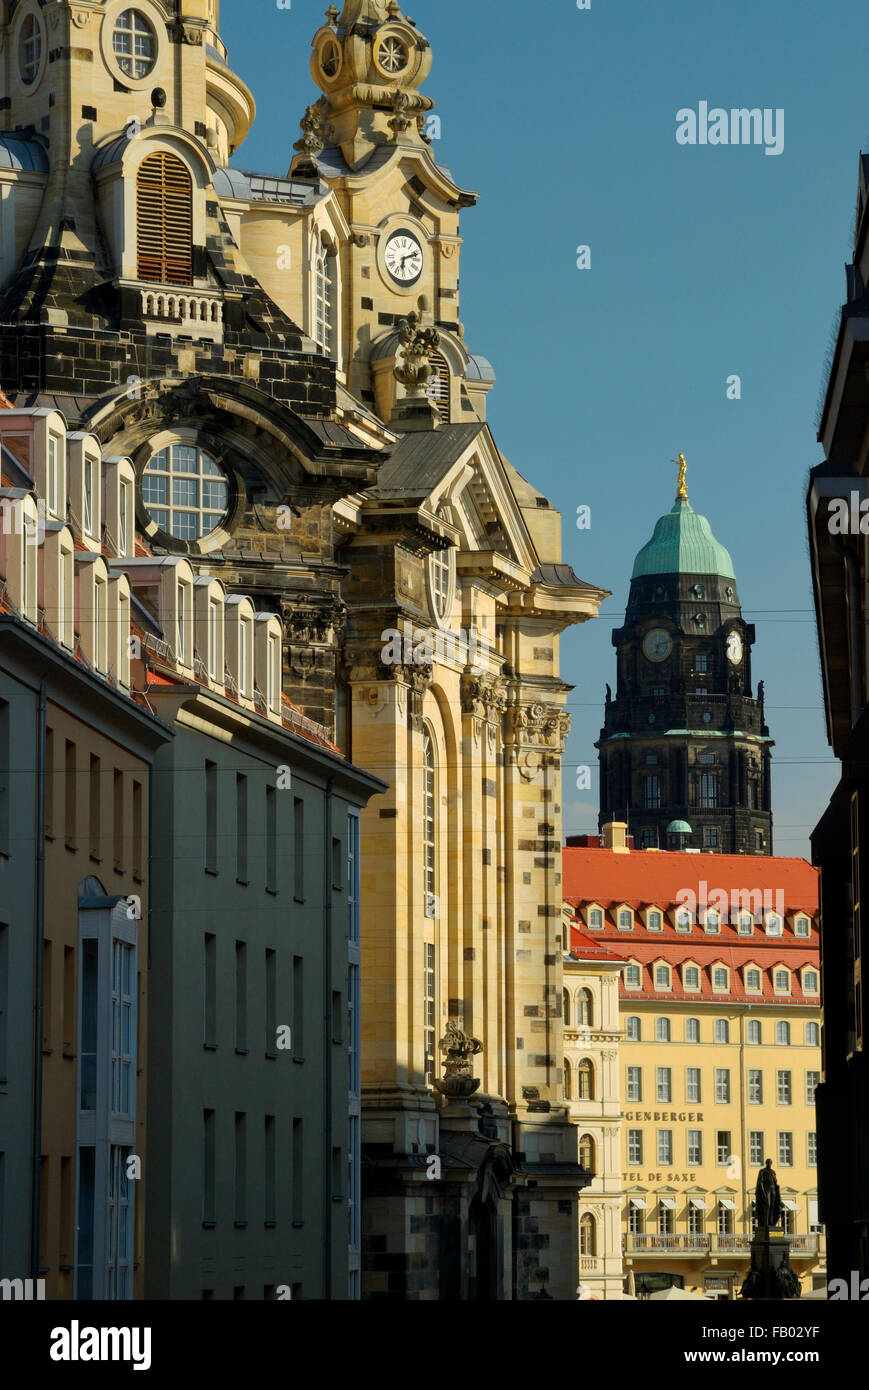 Münzgasse, Frauenkirche, Rathausturm, Martin Luther Statue et Rathaus, Dresde, Saxe, Allemagne Banque D'Images